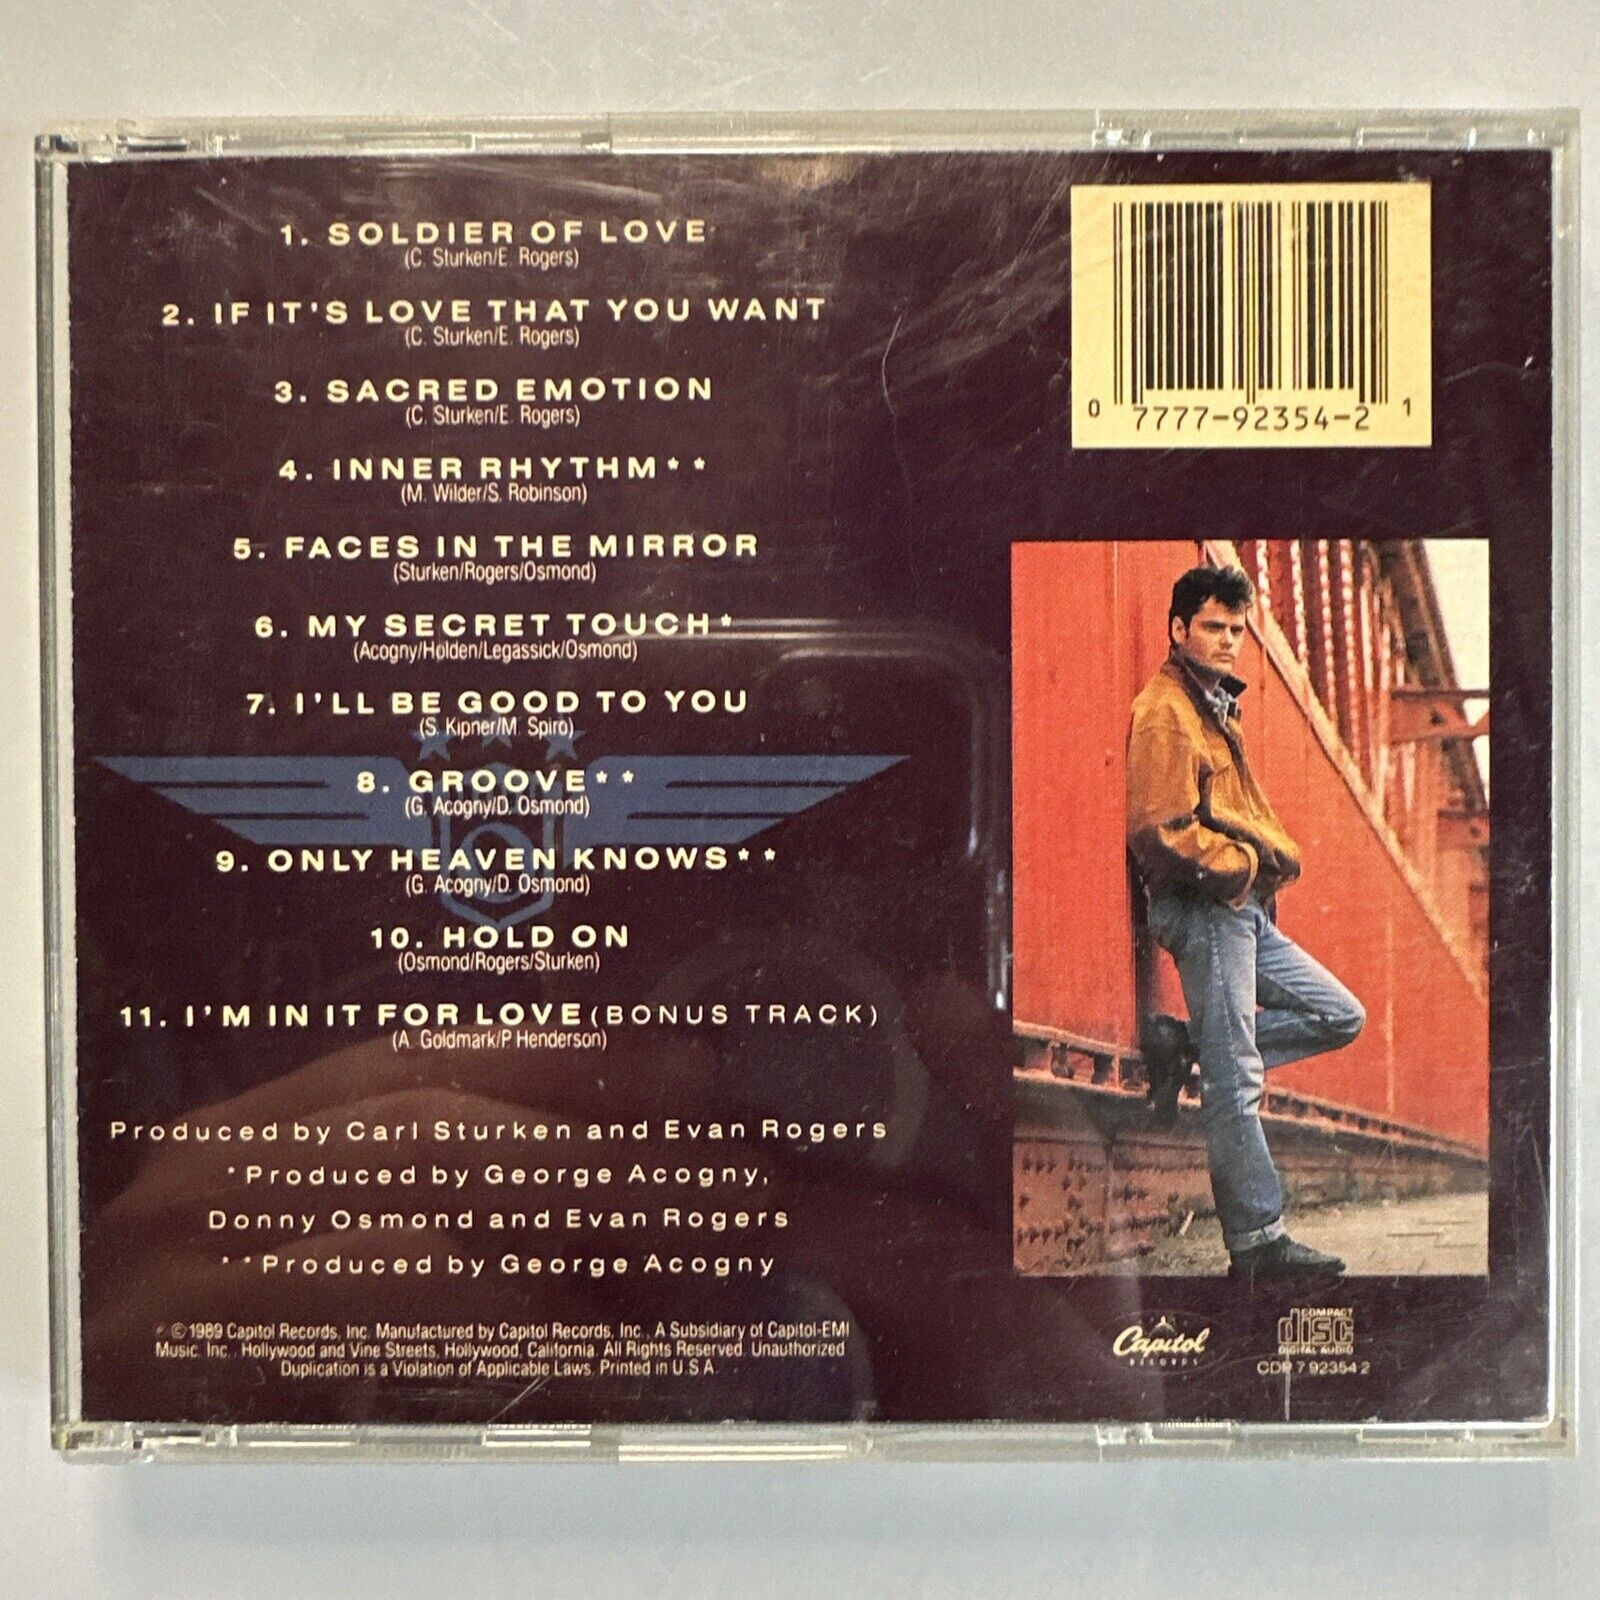 Donny Osmond by Donny Osmond (CD, Apr-1989, Capitol/EMI Records) No Front Cover